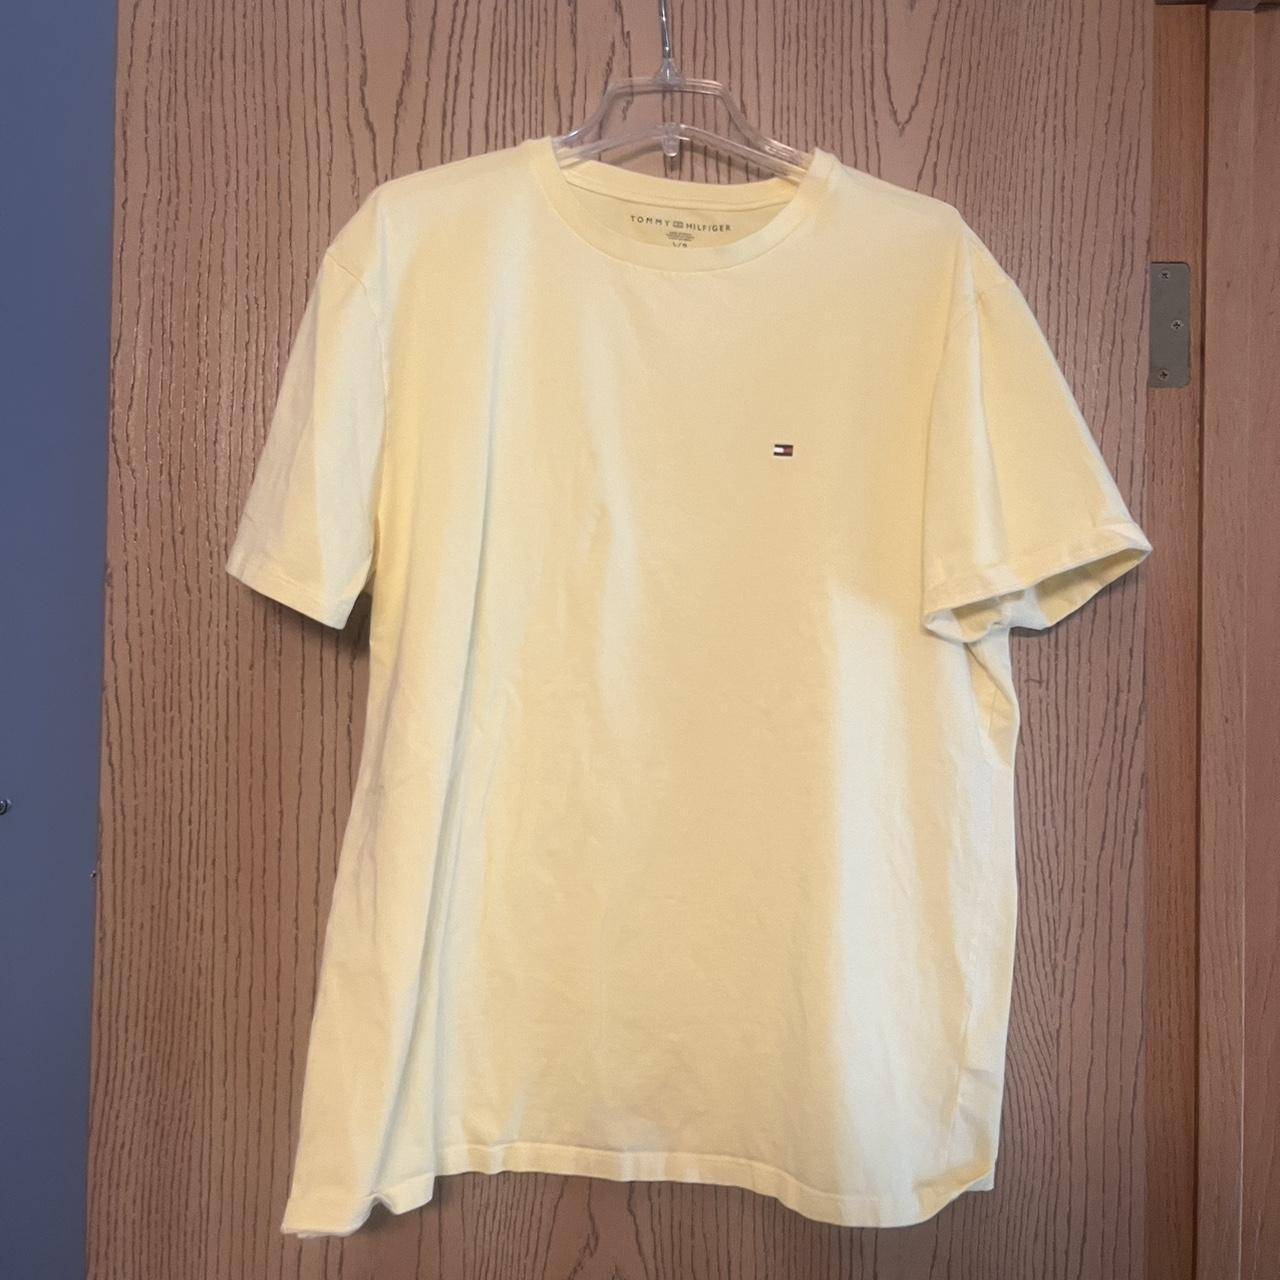 Yellow Tommy shirt - Depop